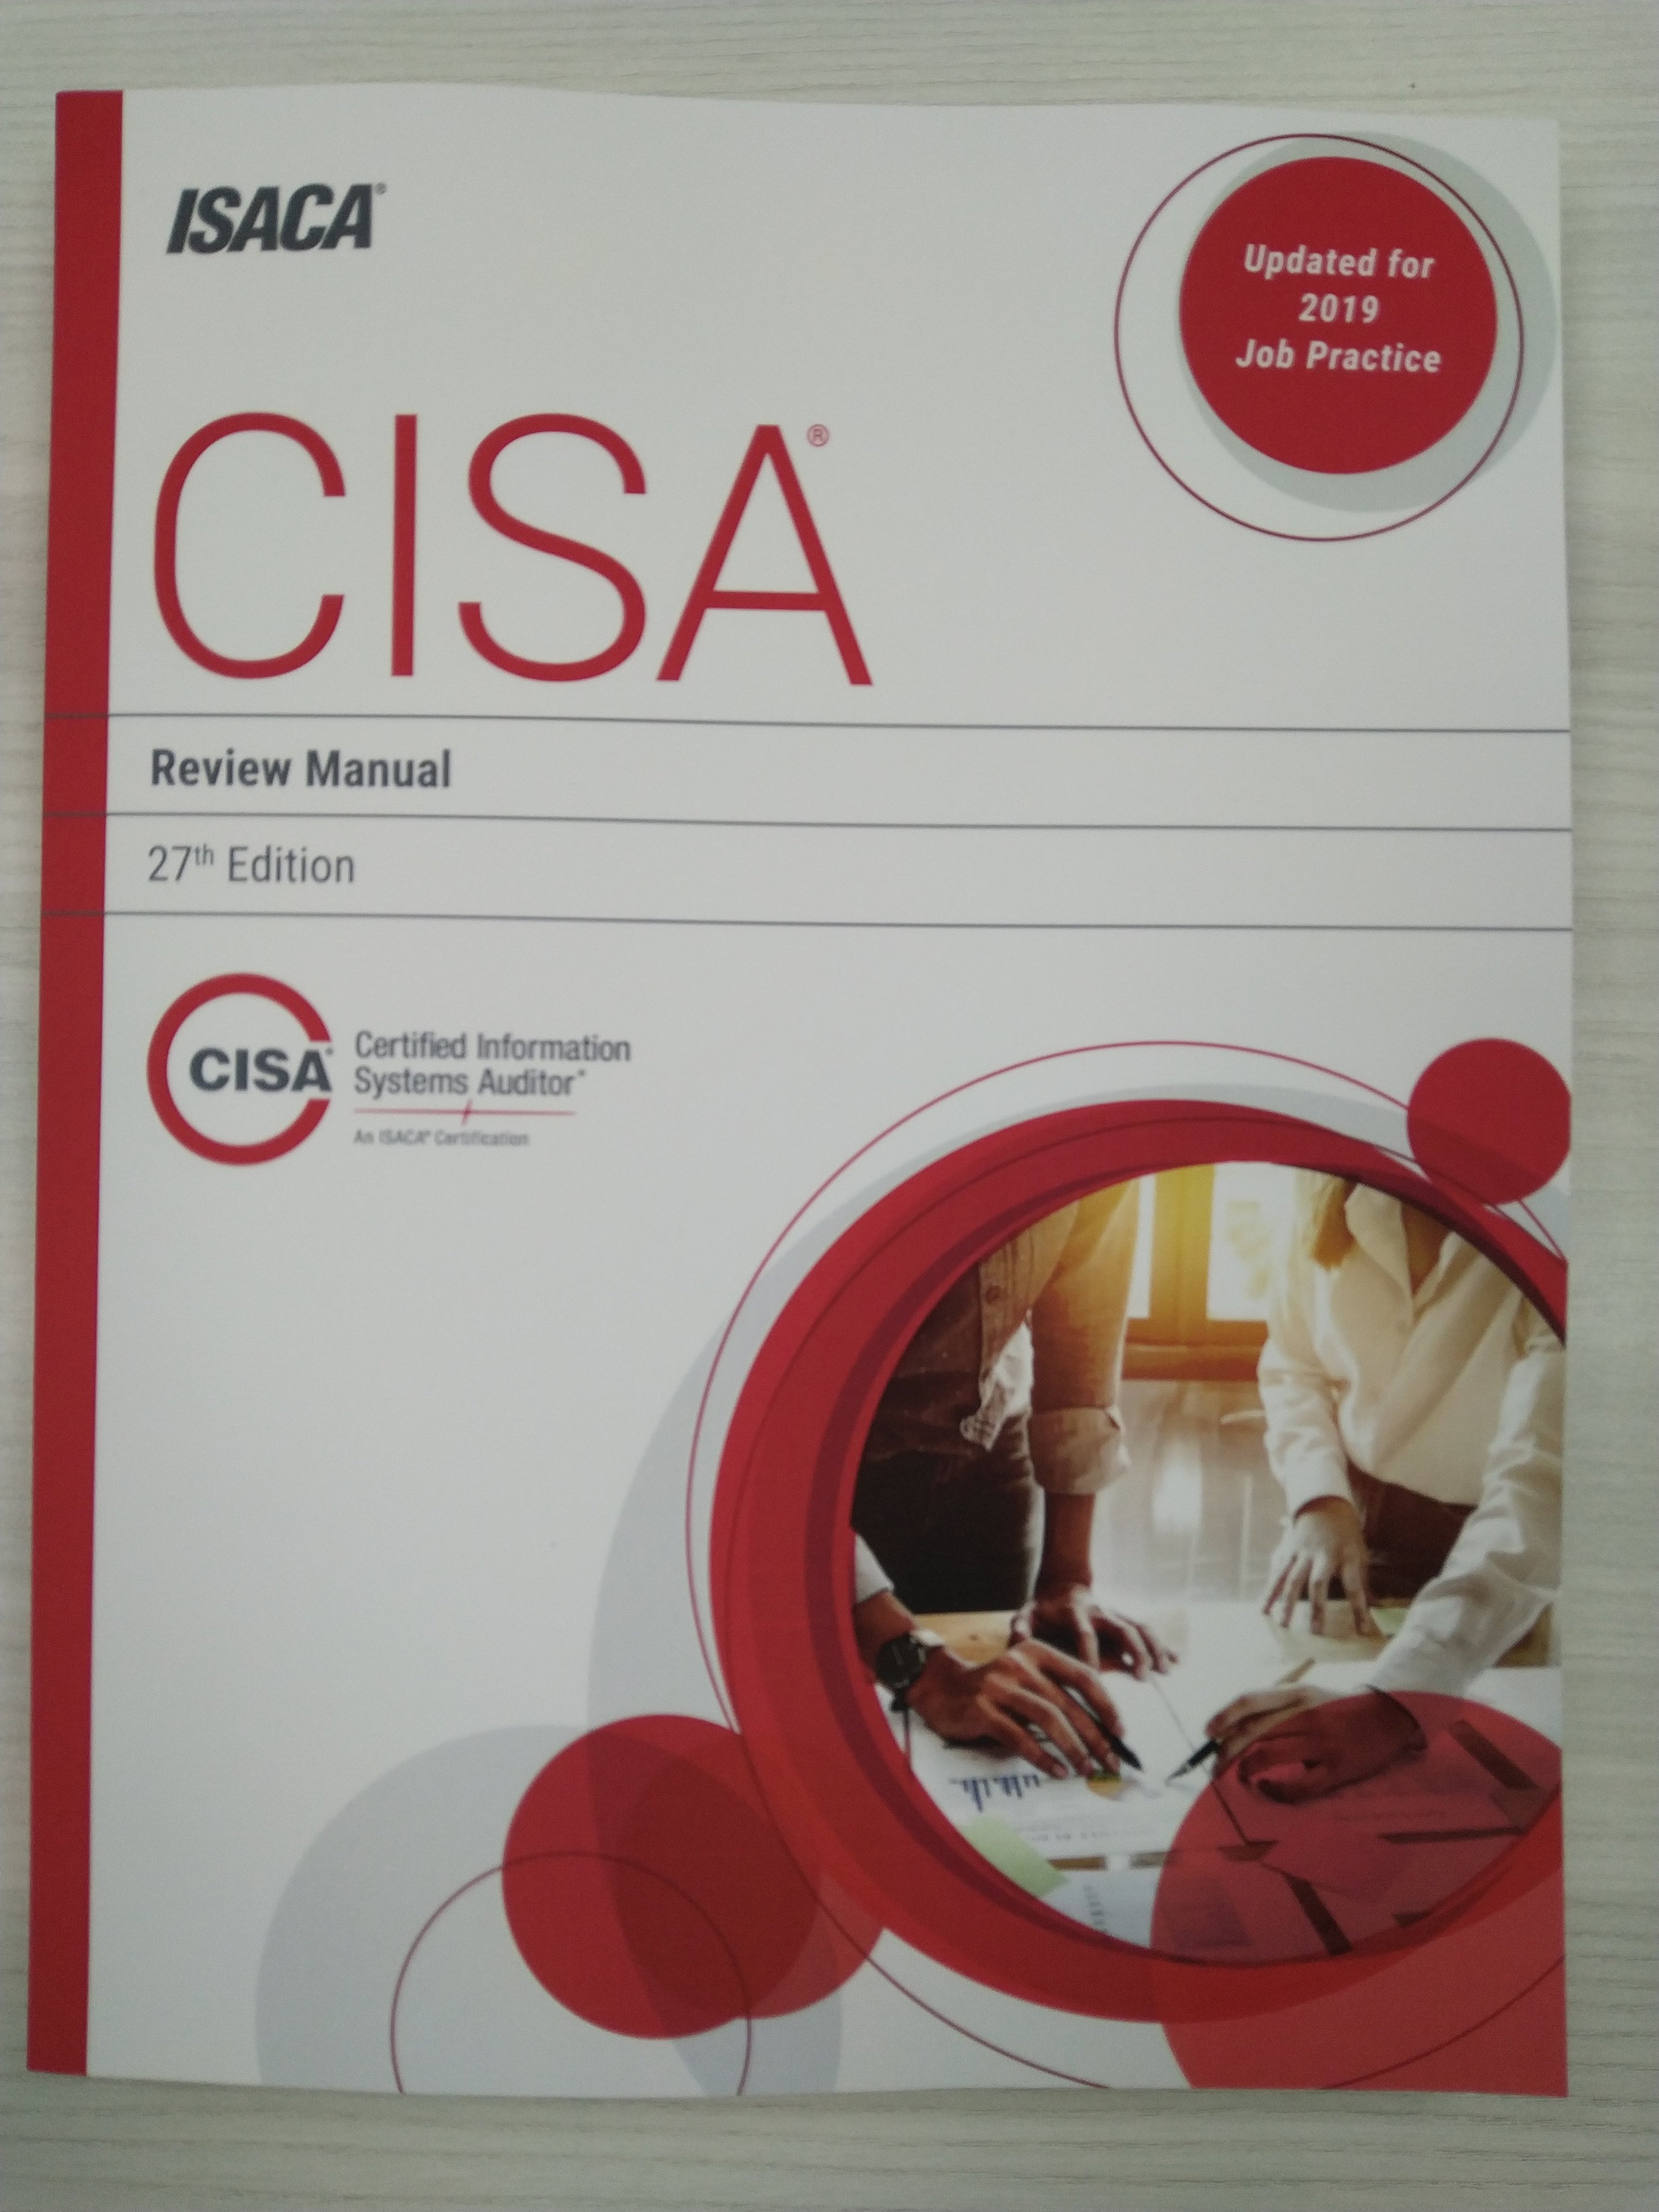 CISA 試験サンプル問題解答・解説集、レビューマニュアル 2冊セット-